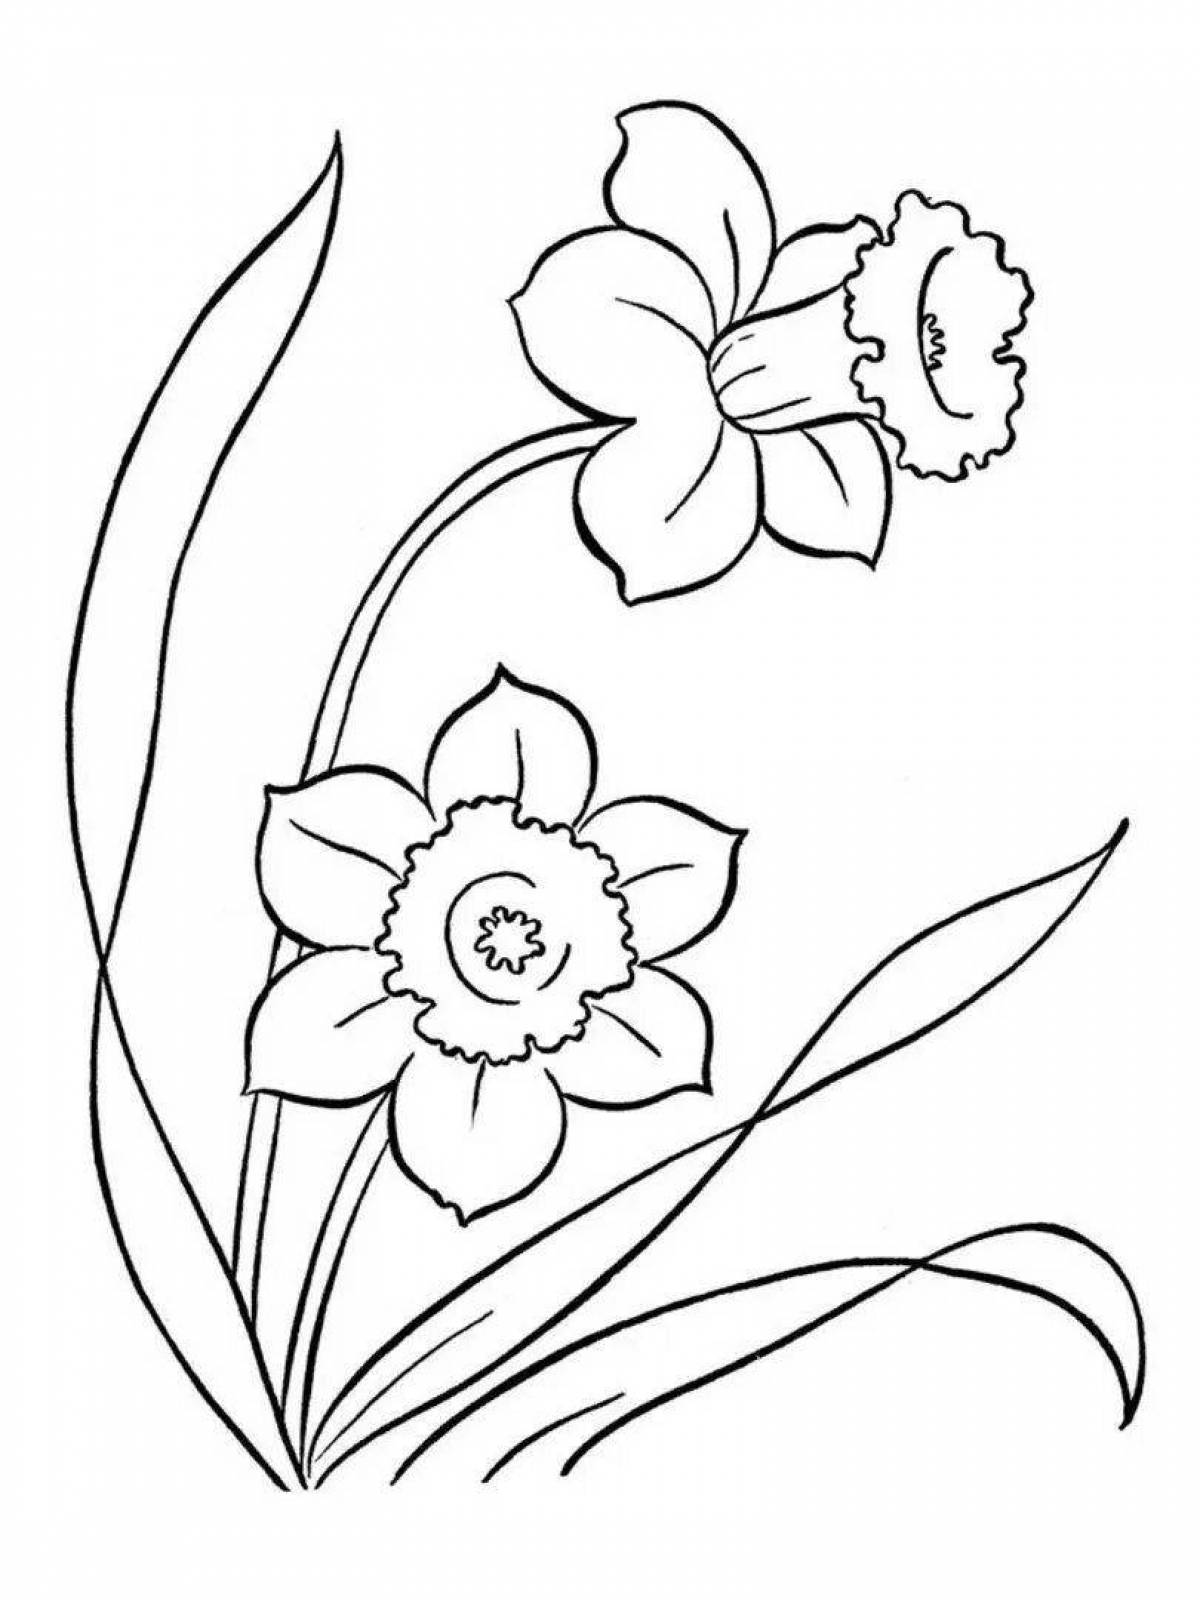 Coloring page beautiful primrose